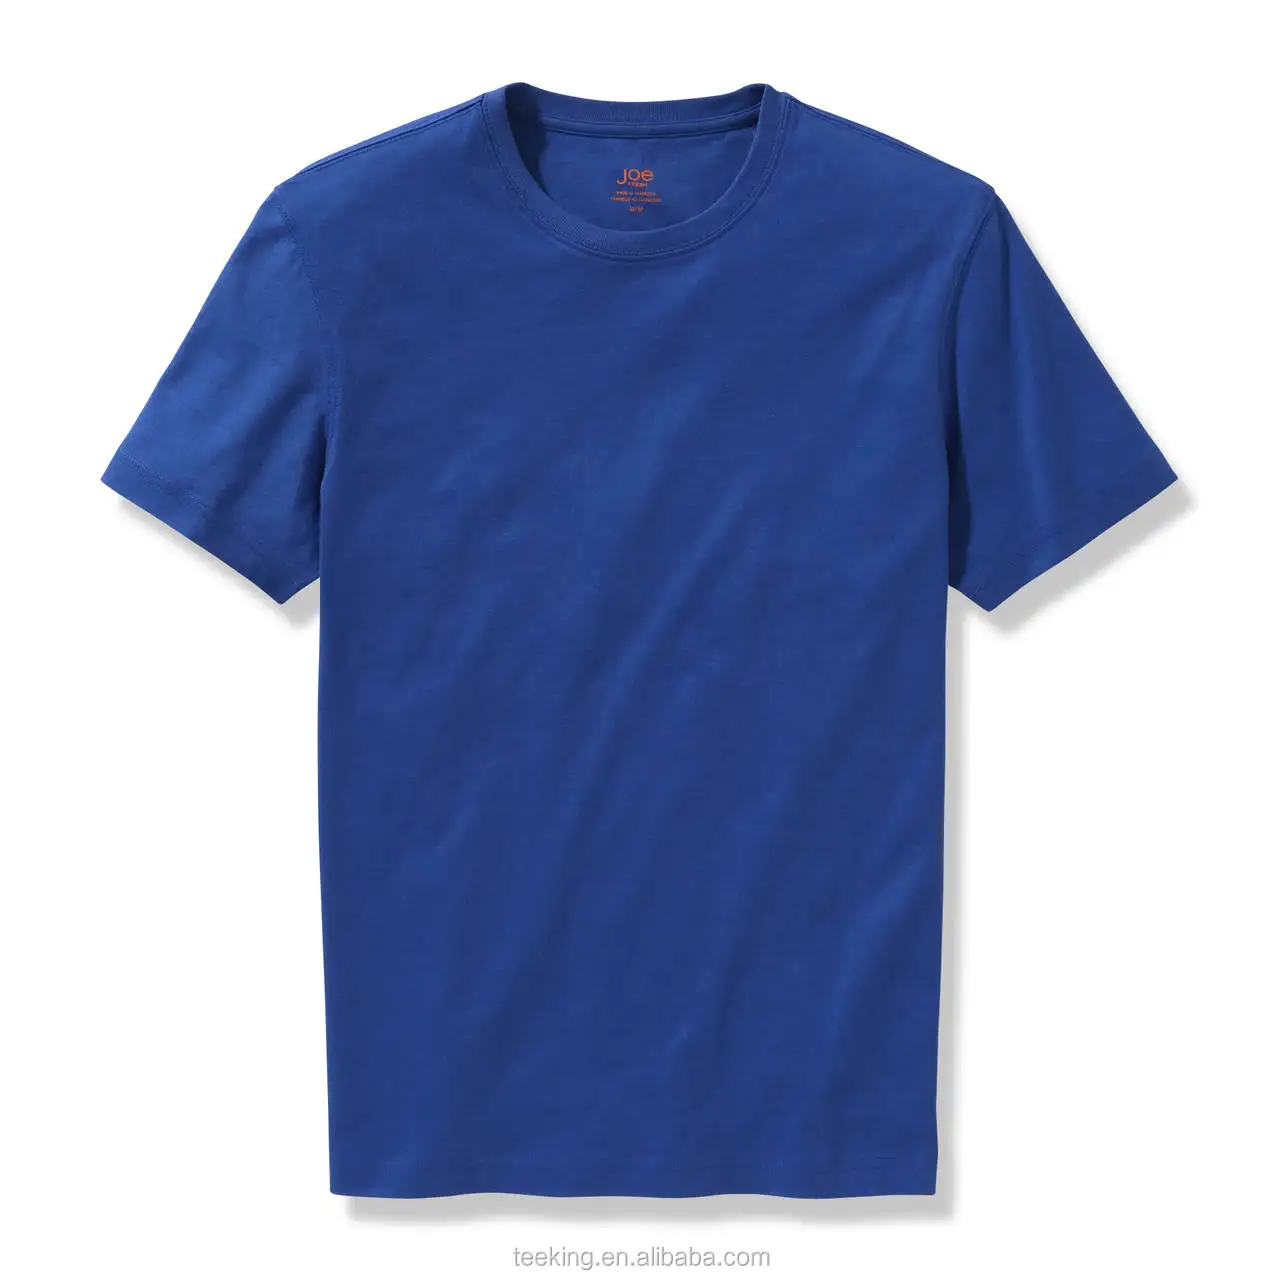 Men's Cotton Jersey Tee T Shirt - Buy Cotton Jersey T Shirt,Men's ...